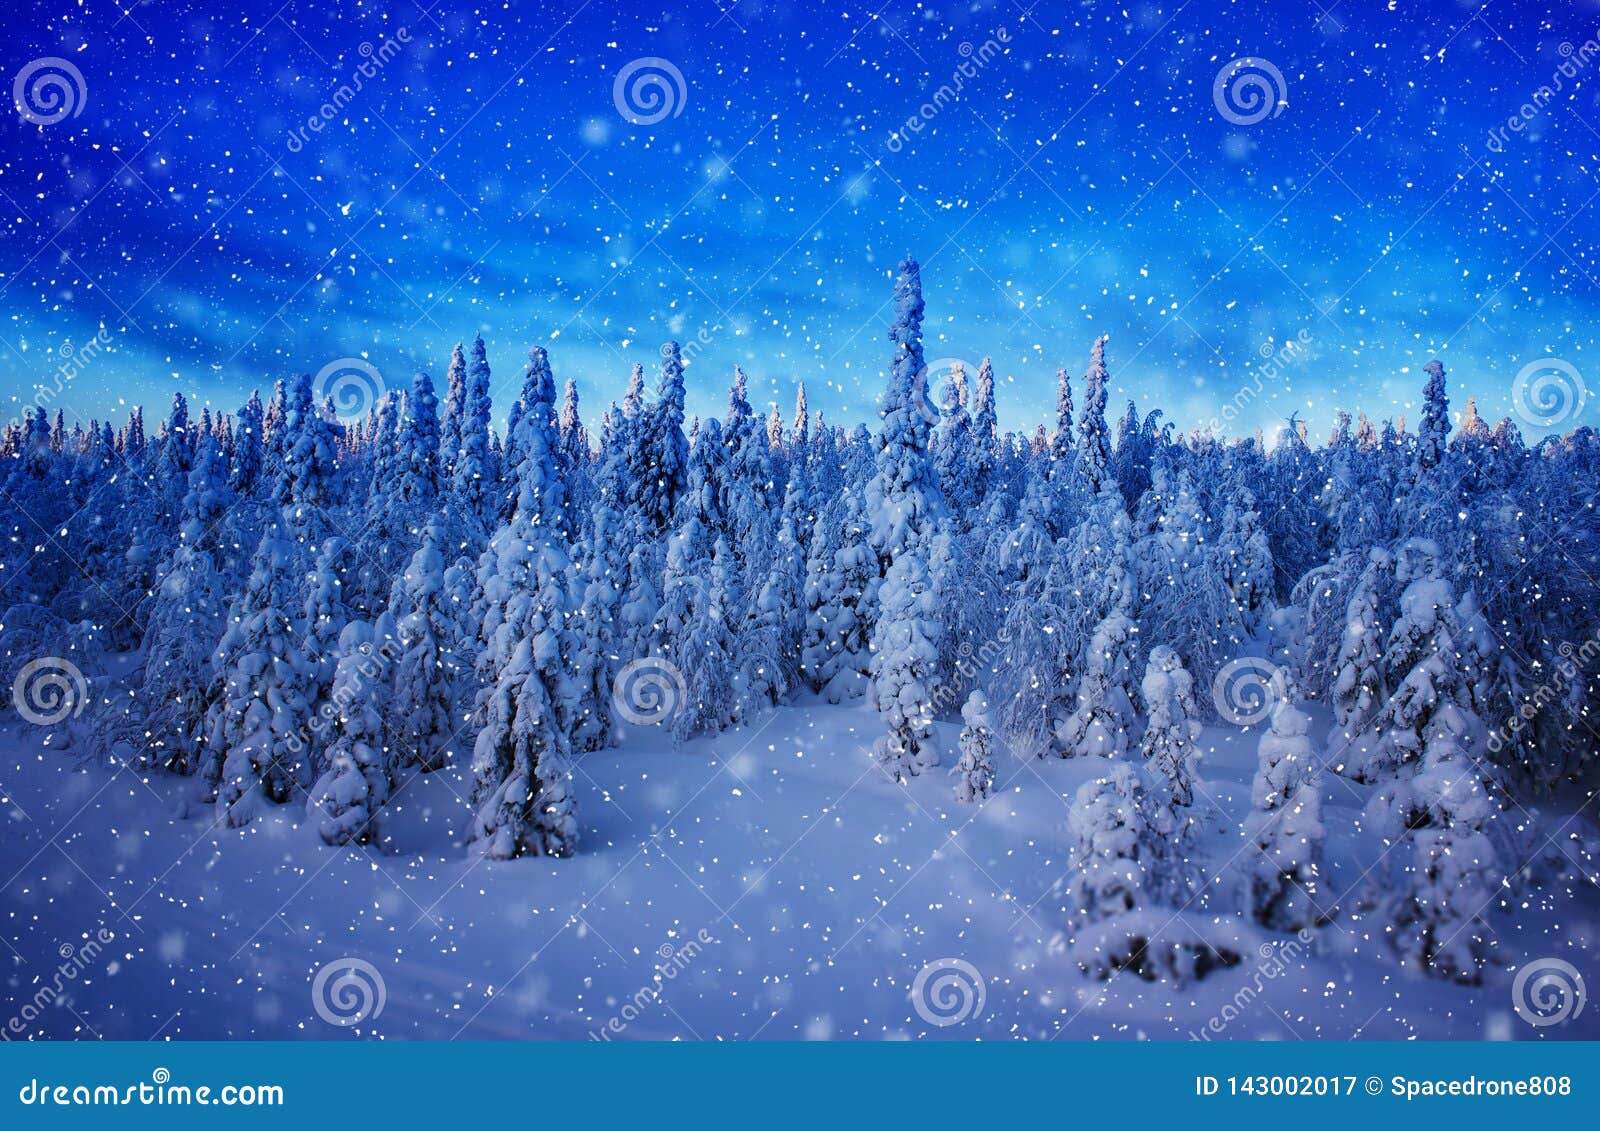 snowing in finnish woods landscape